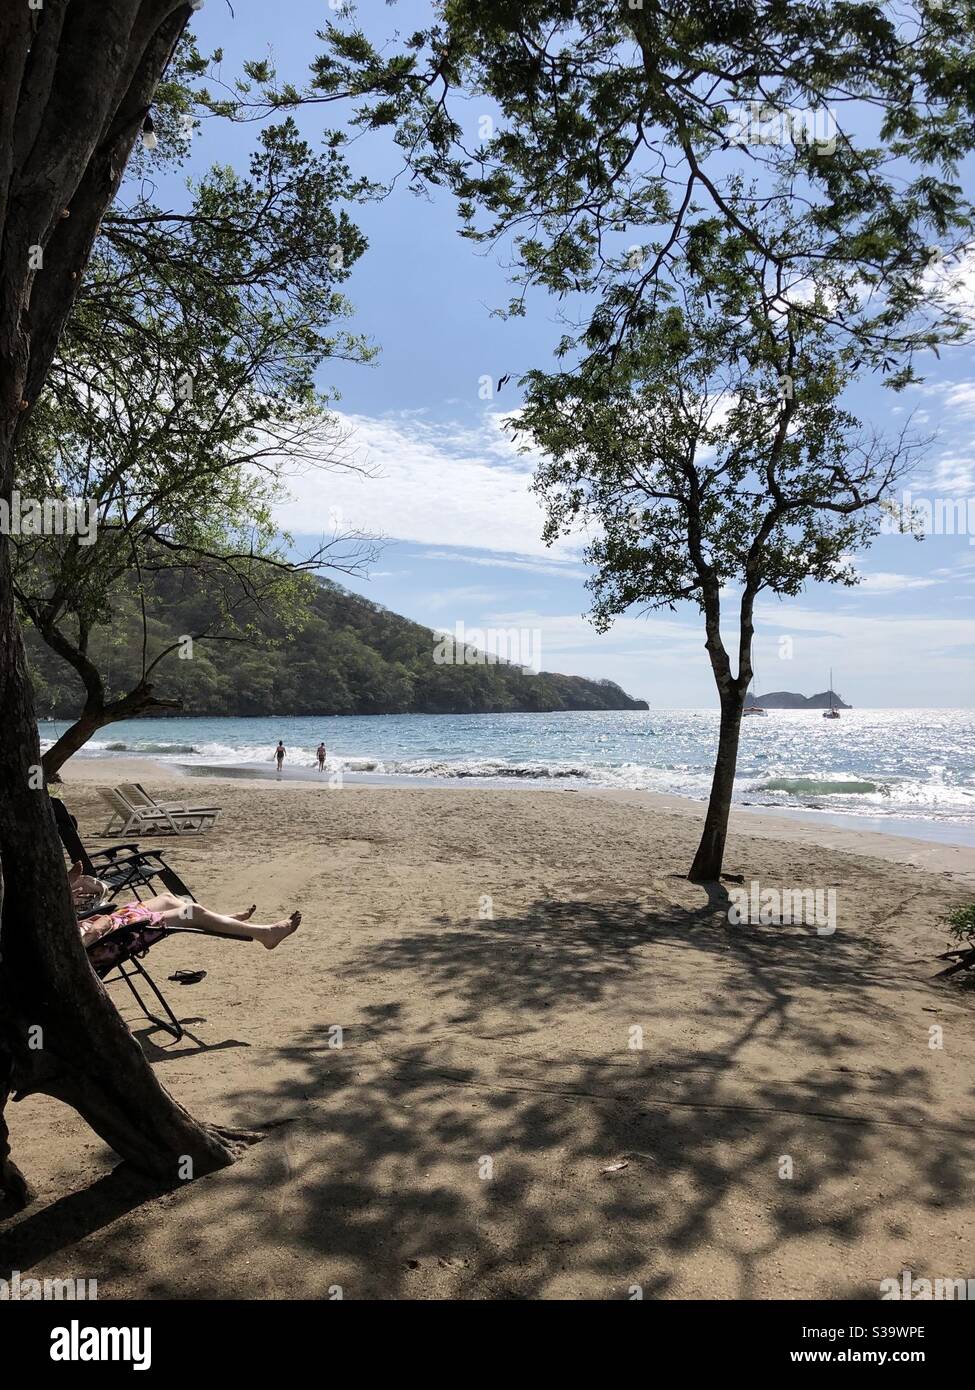 Playa Hermosa beach in Guanacaste province, Costa Rica Stock Photo